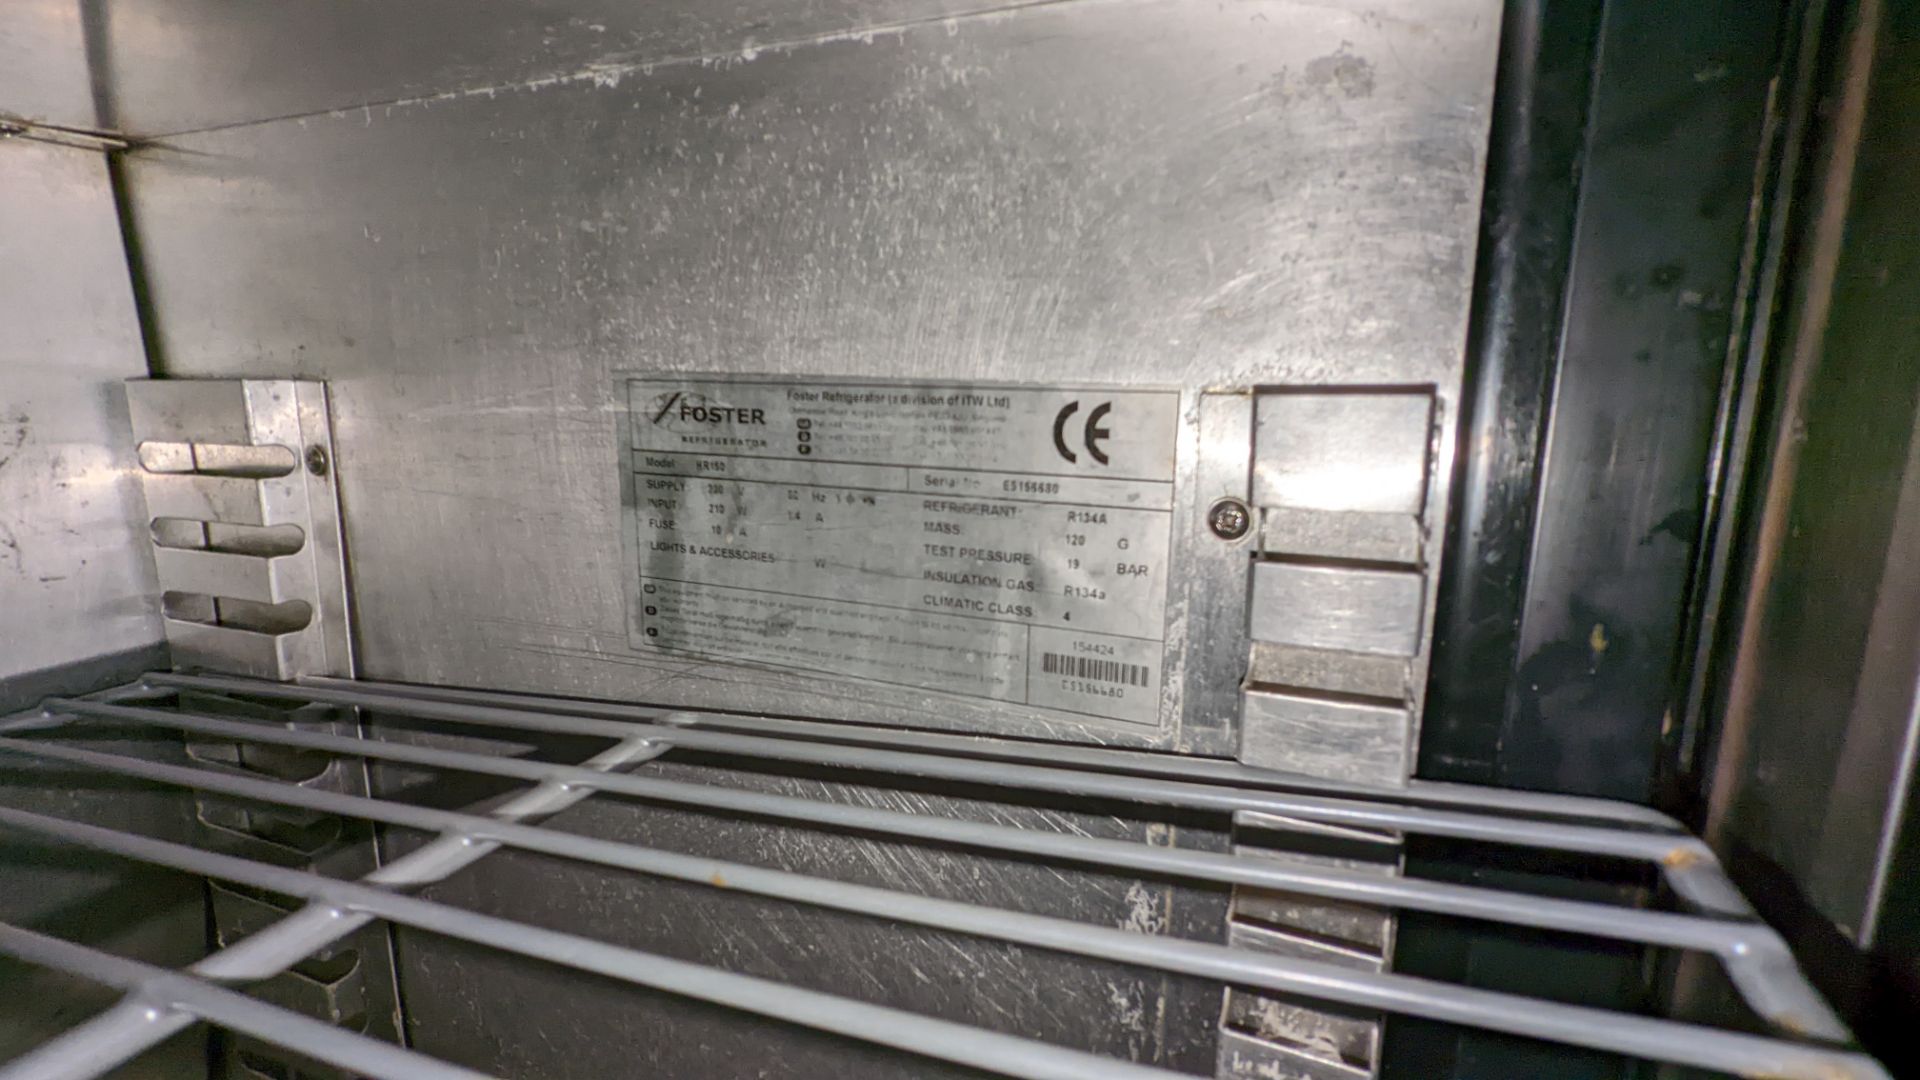 Foster stainless steel undercounter fridge - Image 5 of 5